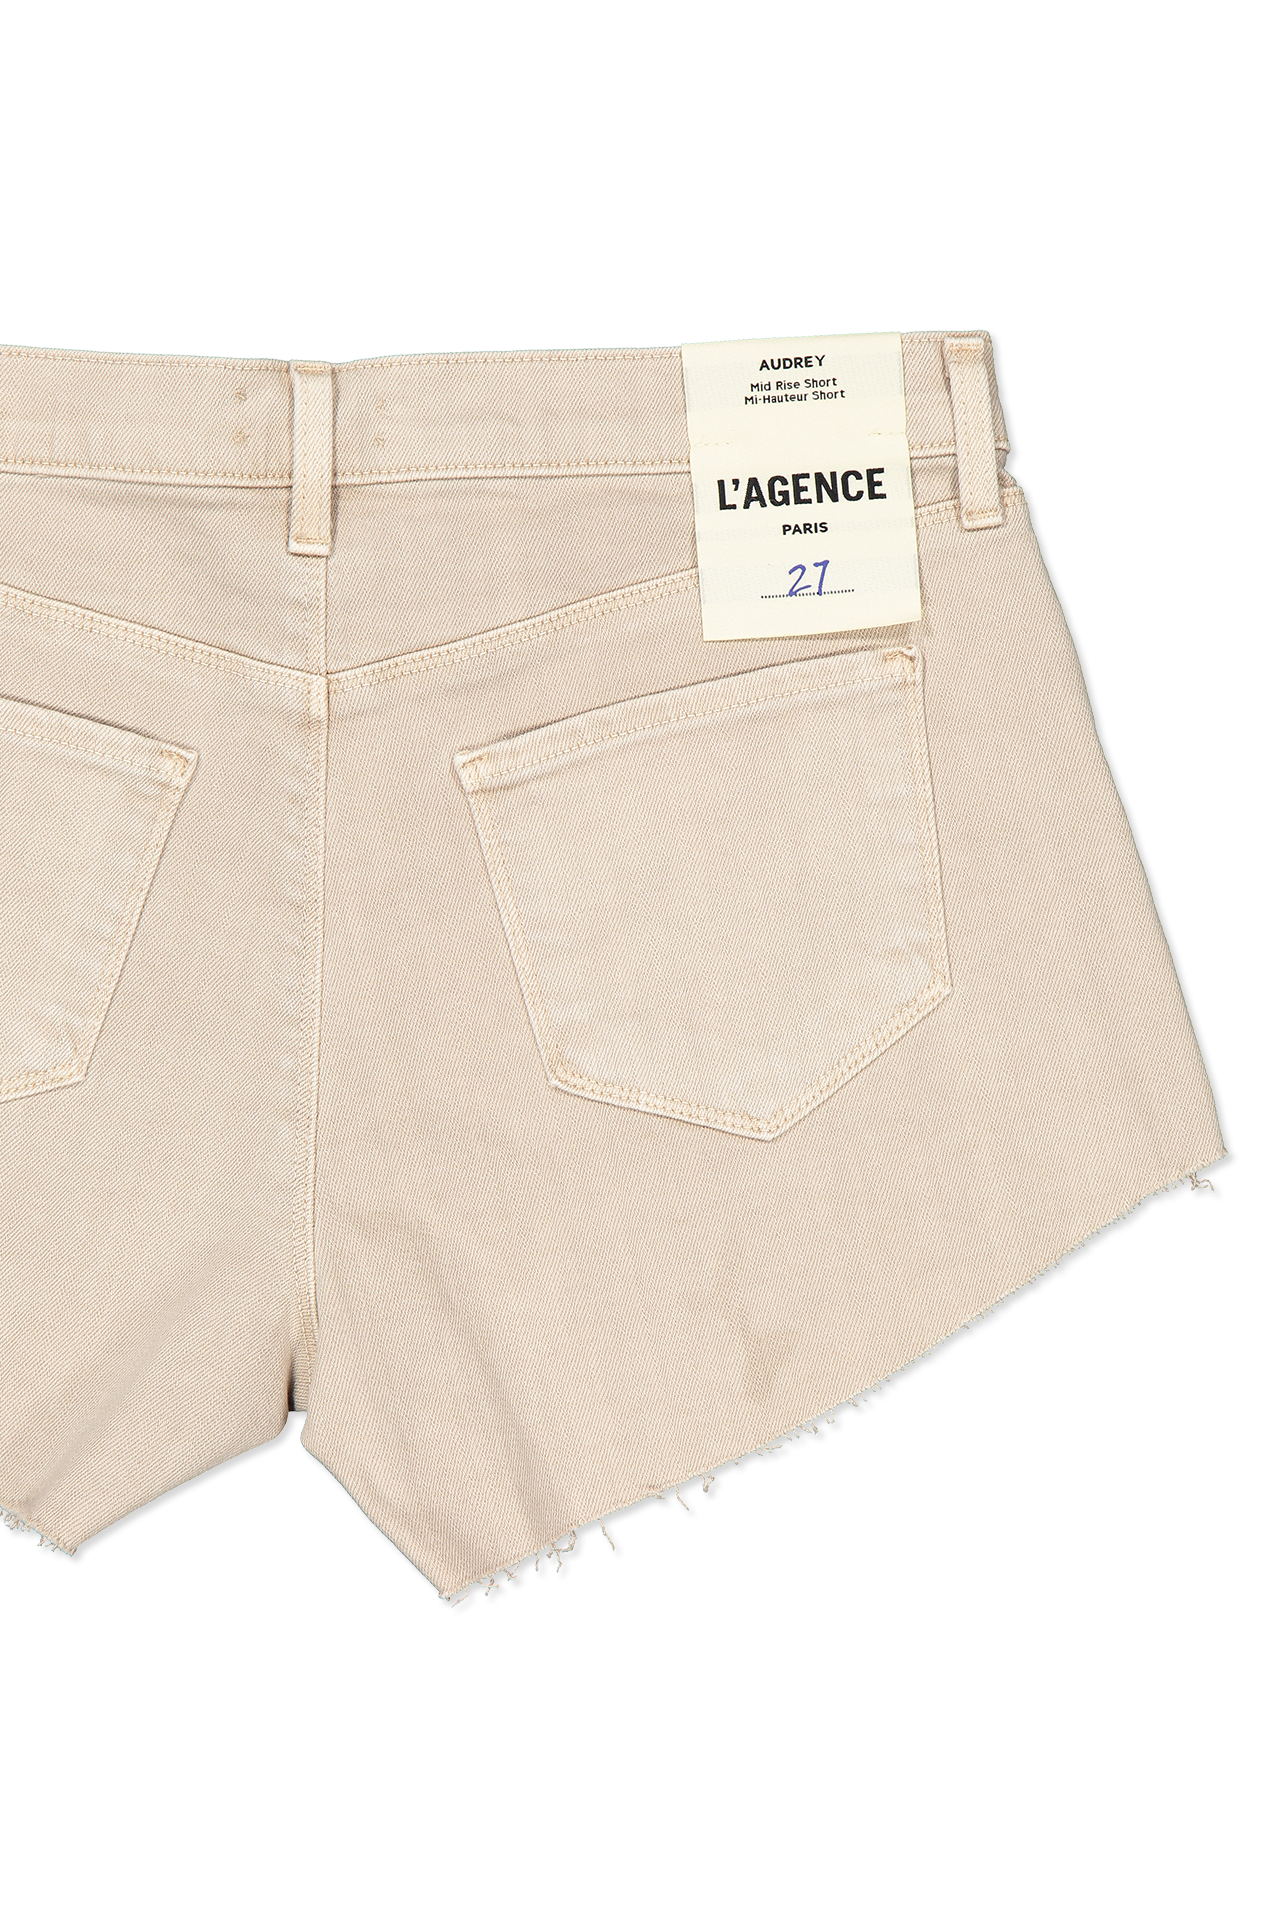 Lagence Audrey Mid-Rise Short Tan Back Pocket Detail Image (6605789659251)